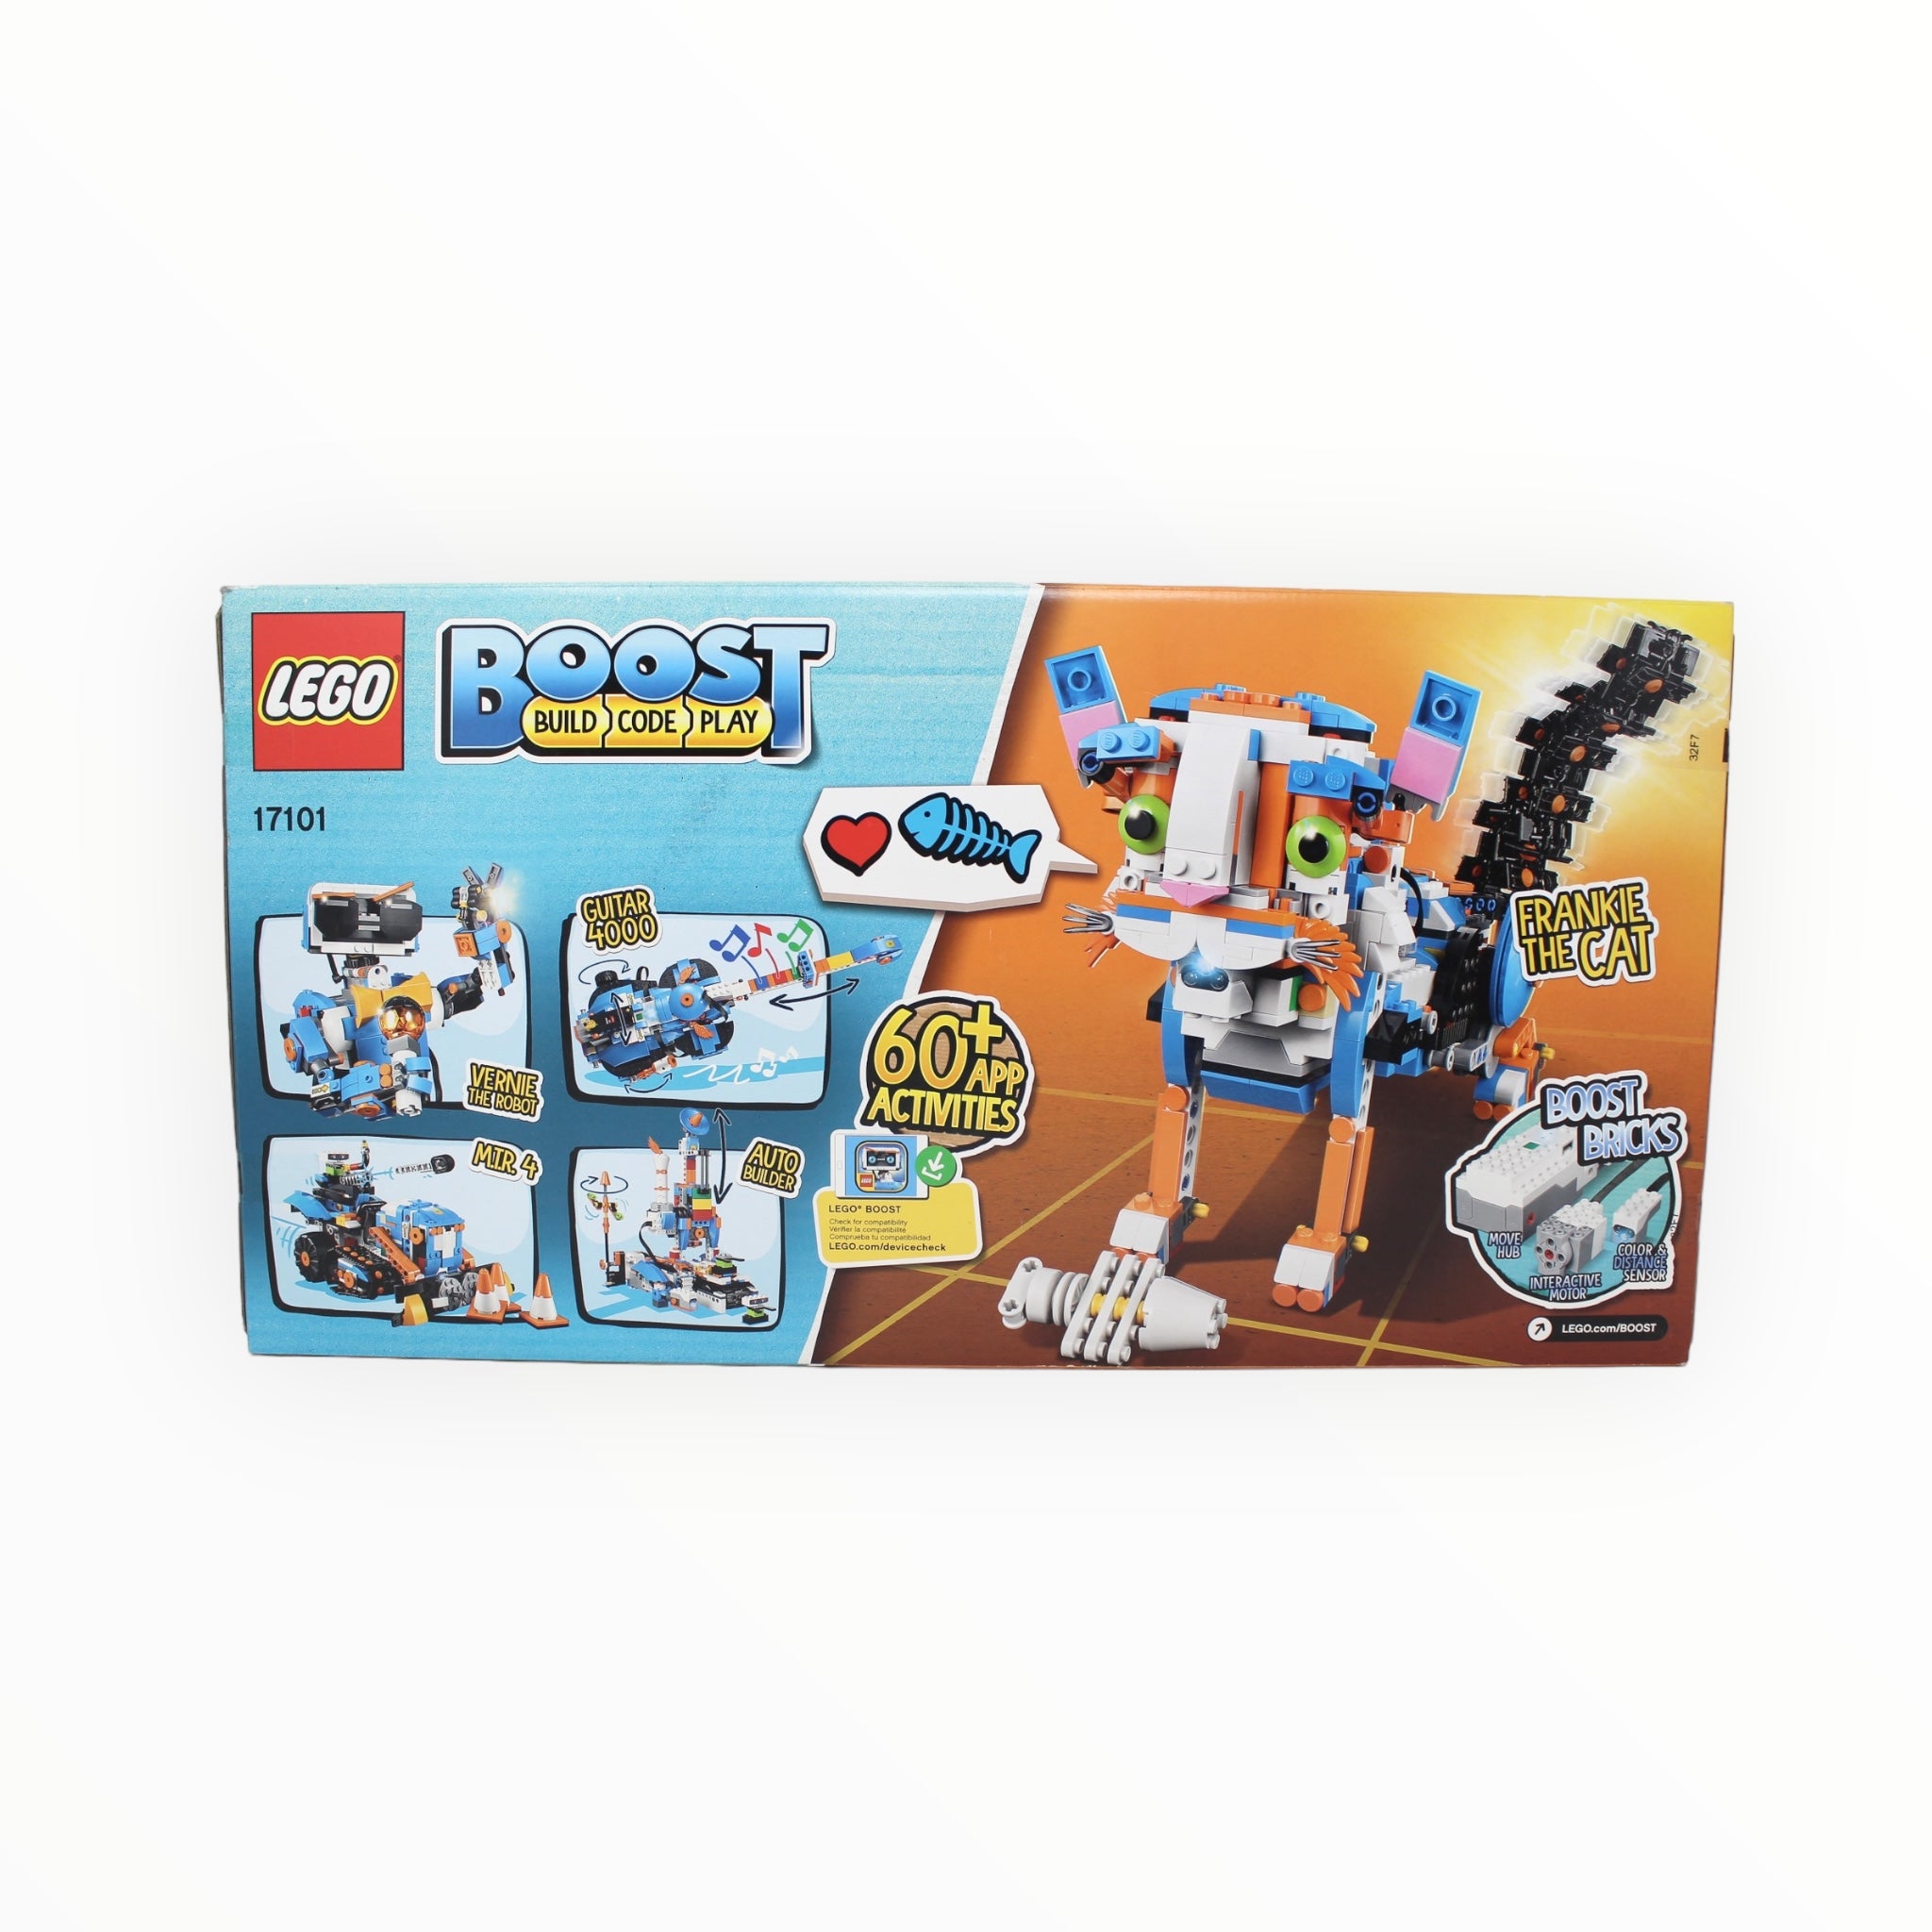 Retired Set 17101 LEGO BOOST Creative Toolbox